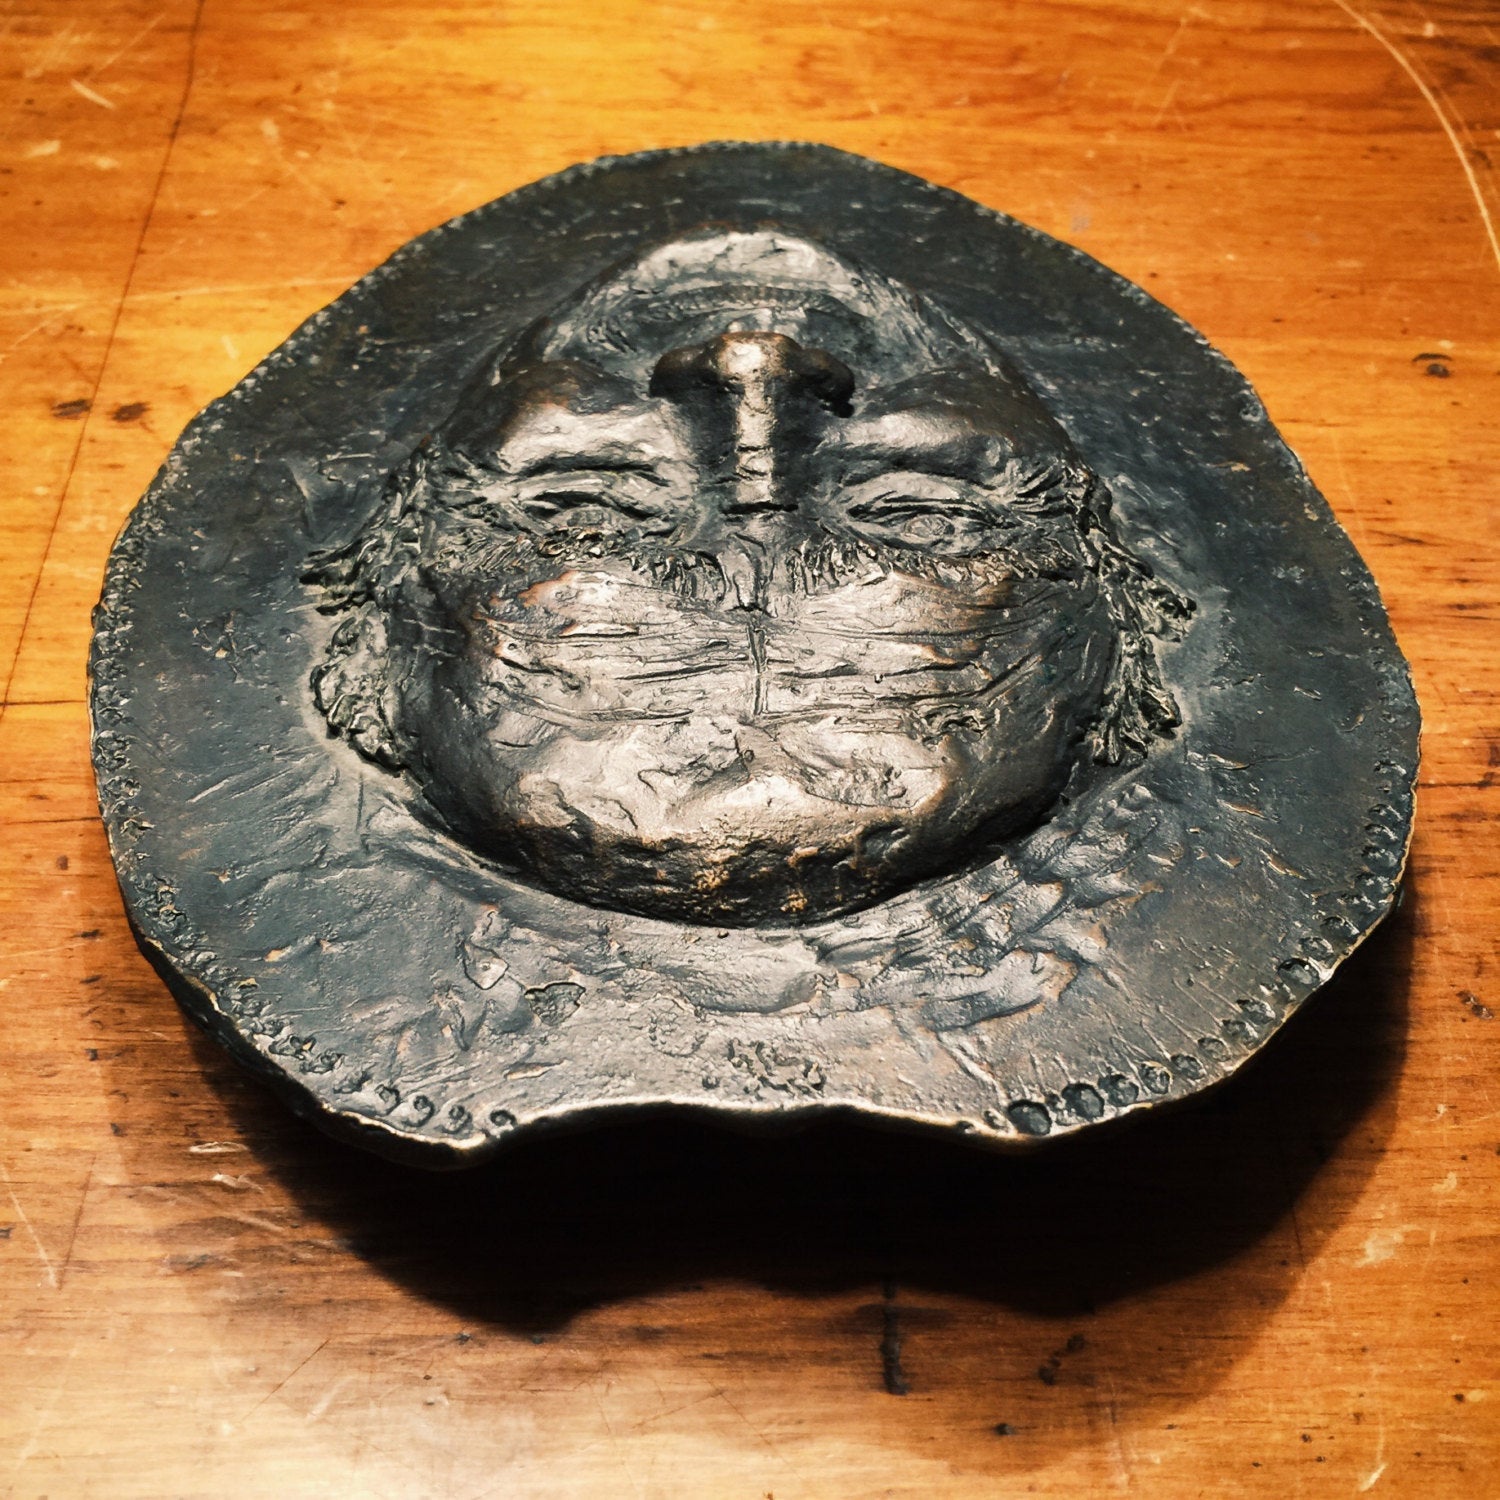 Creepy Metal Head Face Sculpture - Death Mask? - Vintage - Plate - Emblem - Halloween - Macabre